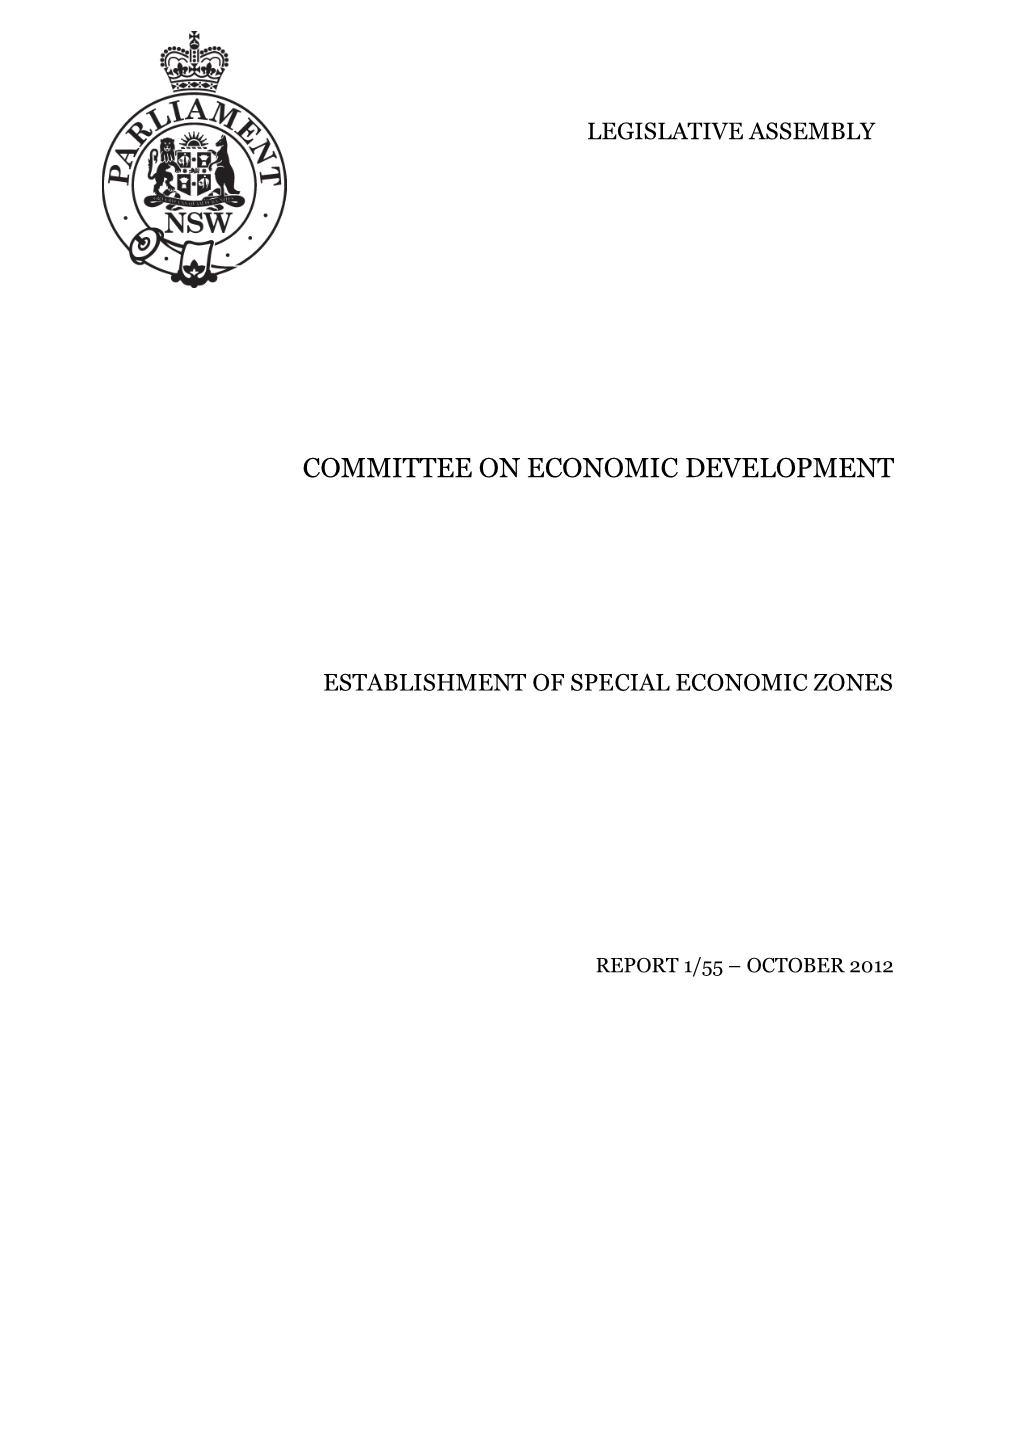 Report 1/55 – October 2012